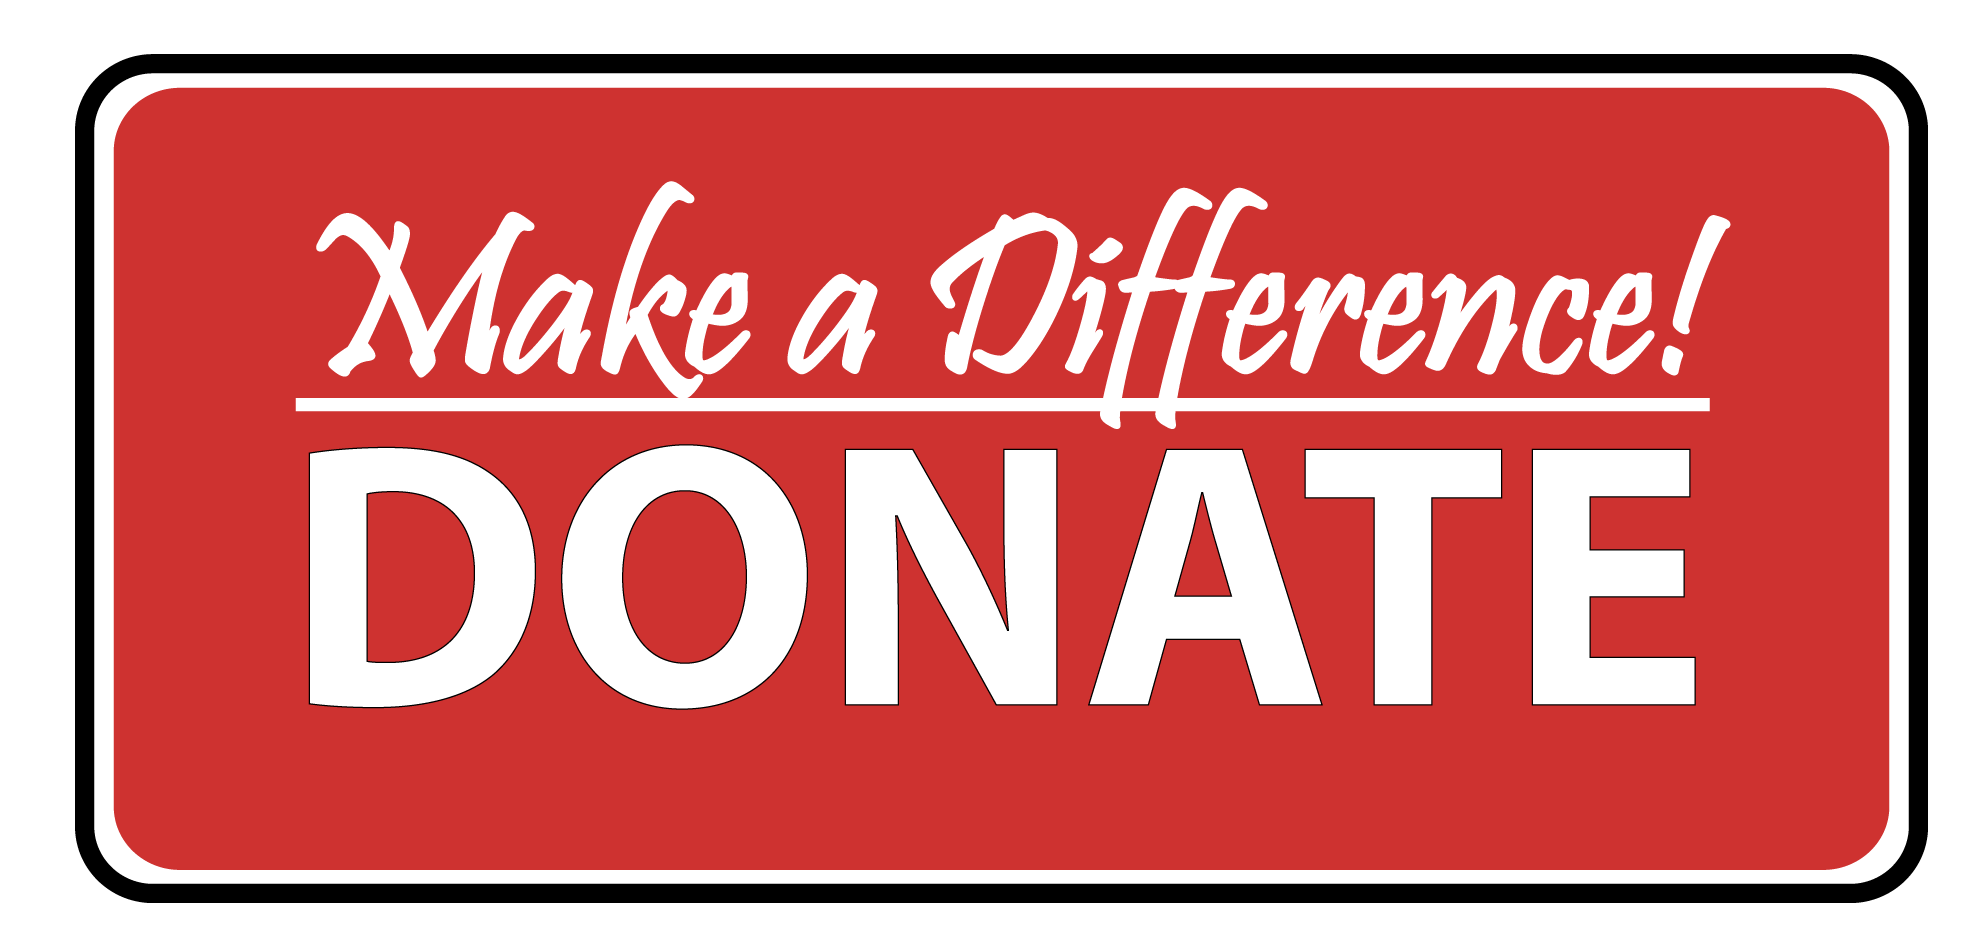 Make Free Will Donation